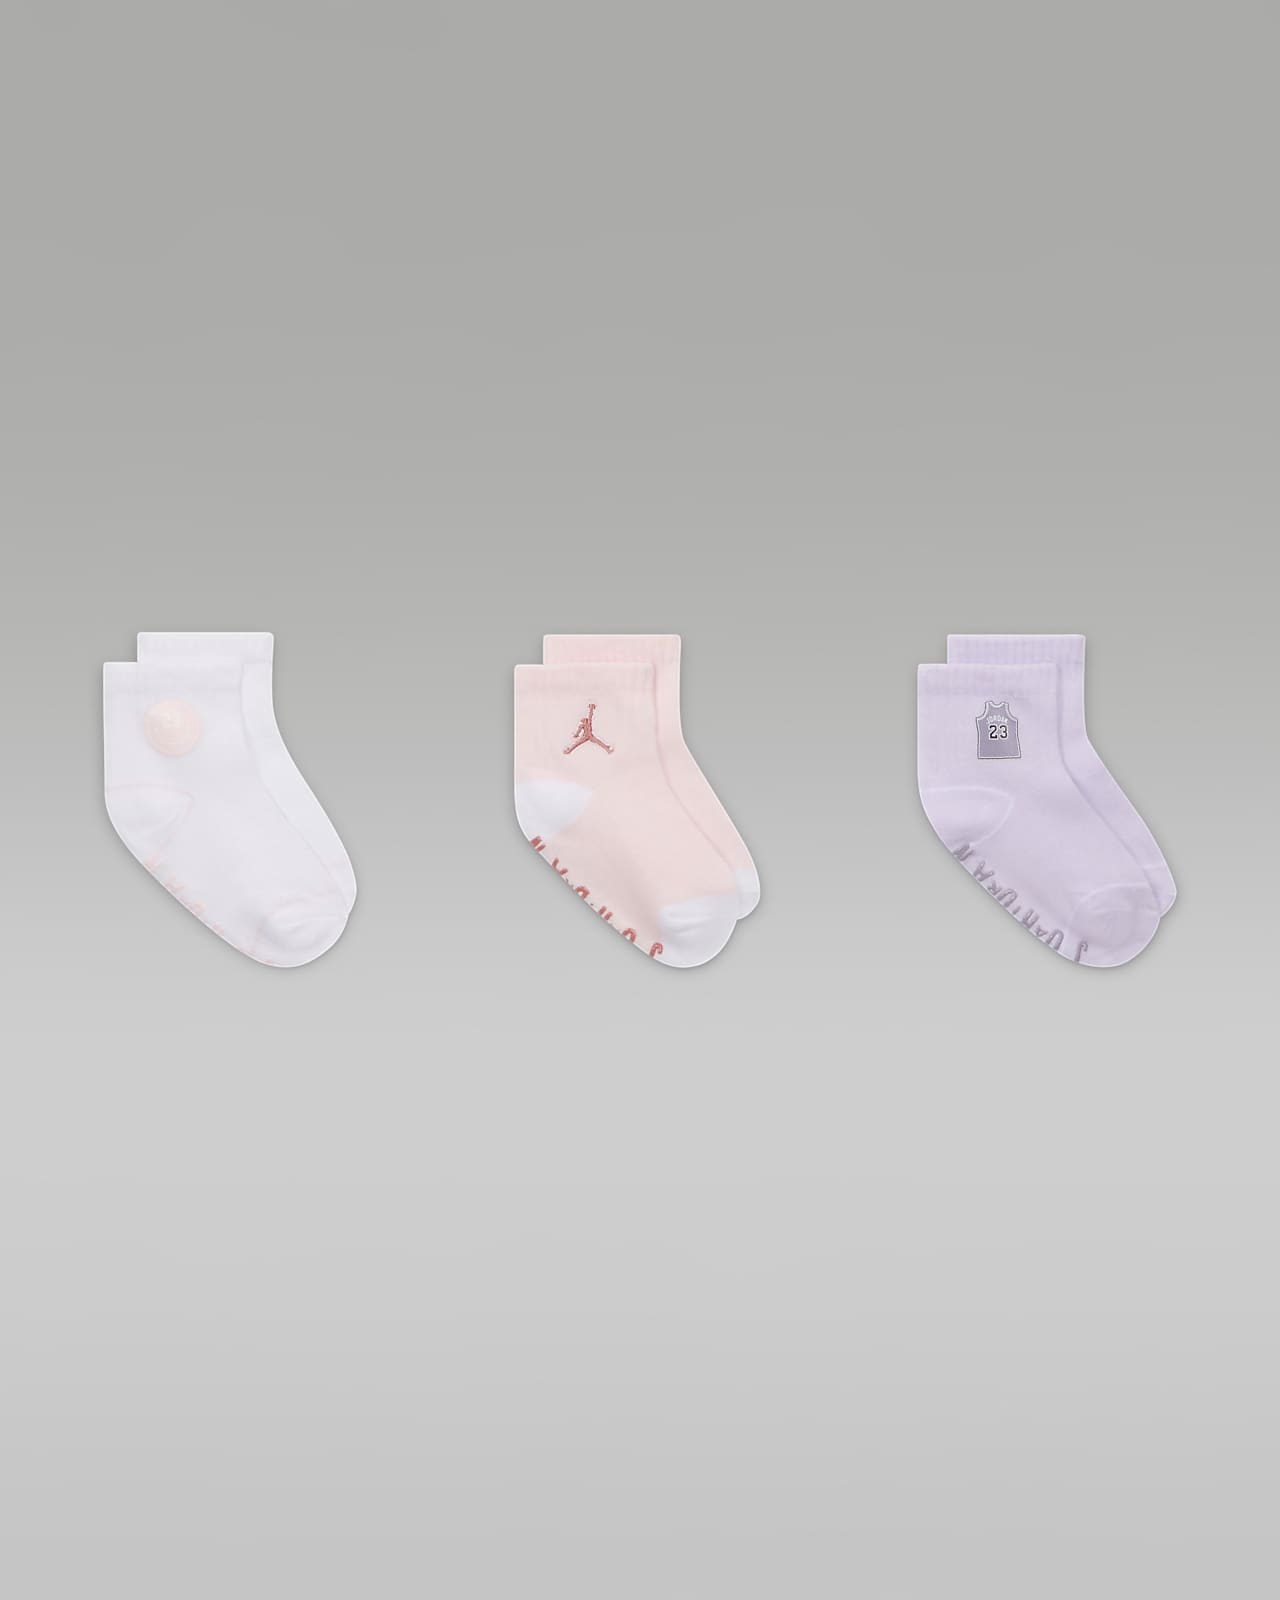 W2C - chaussette nike/ jordan socks : r/FrenchyReps